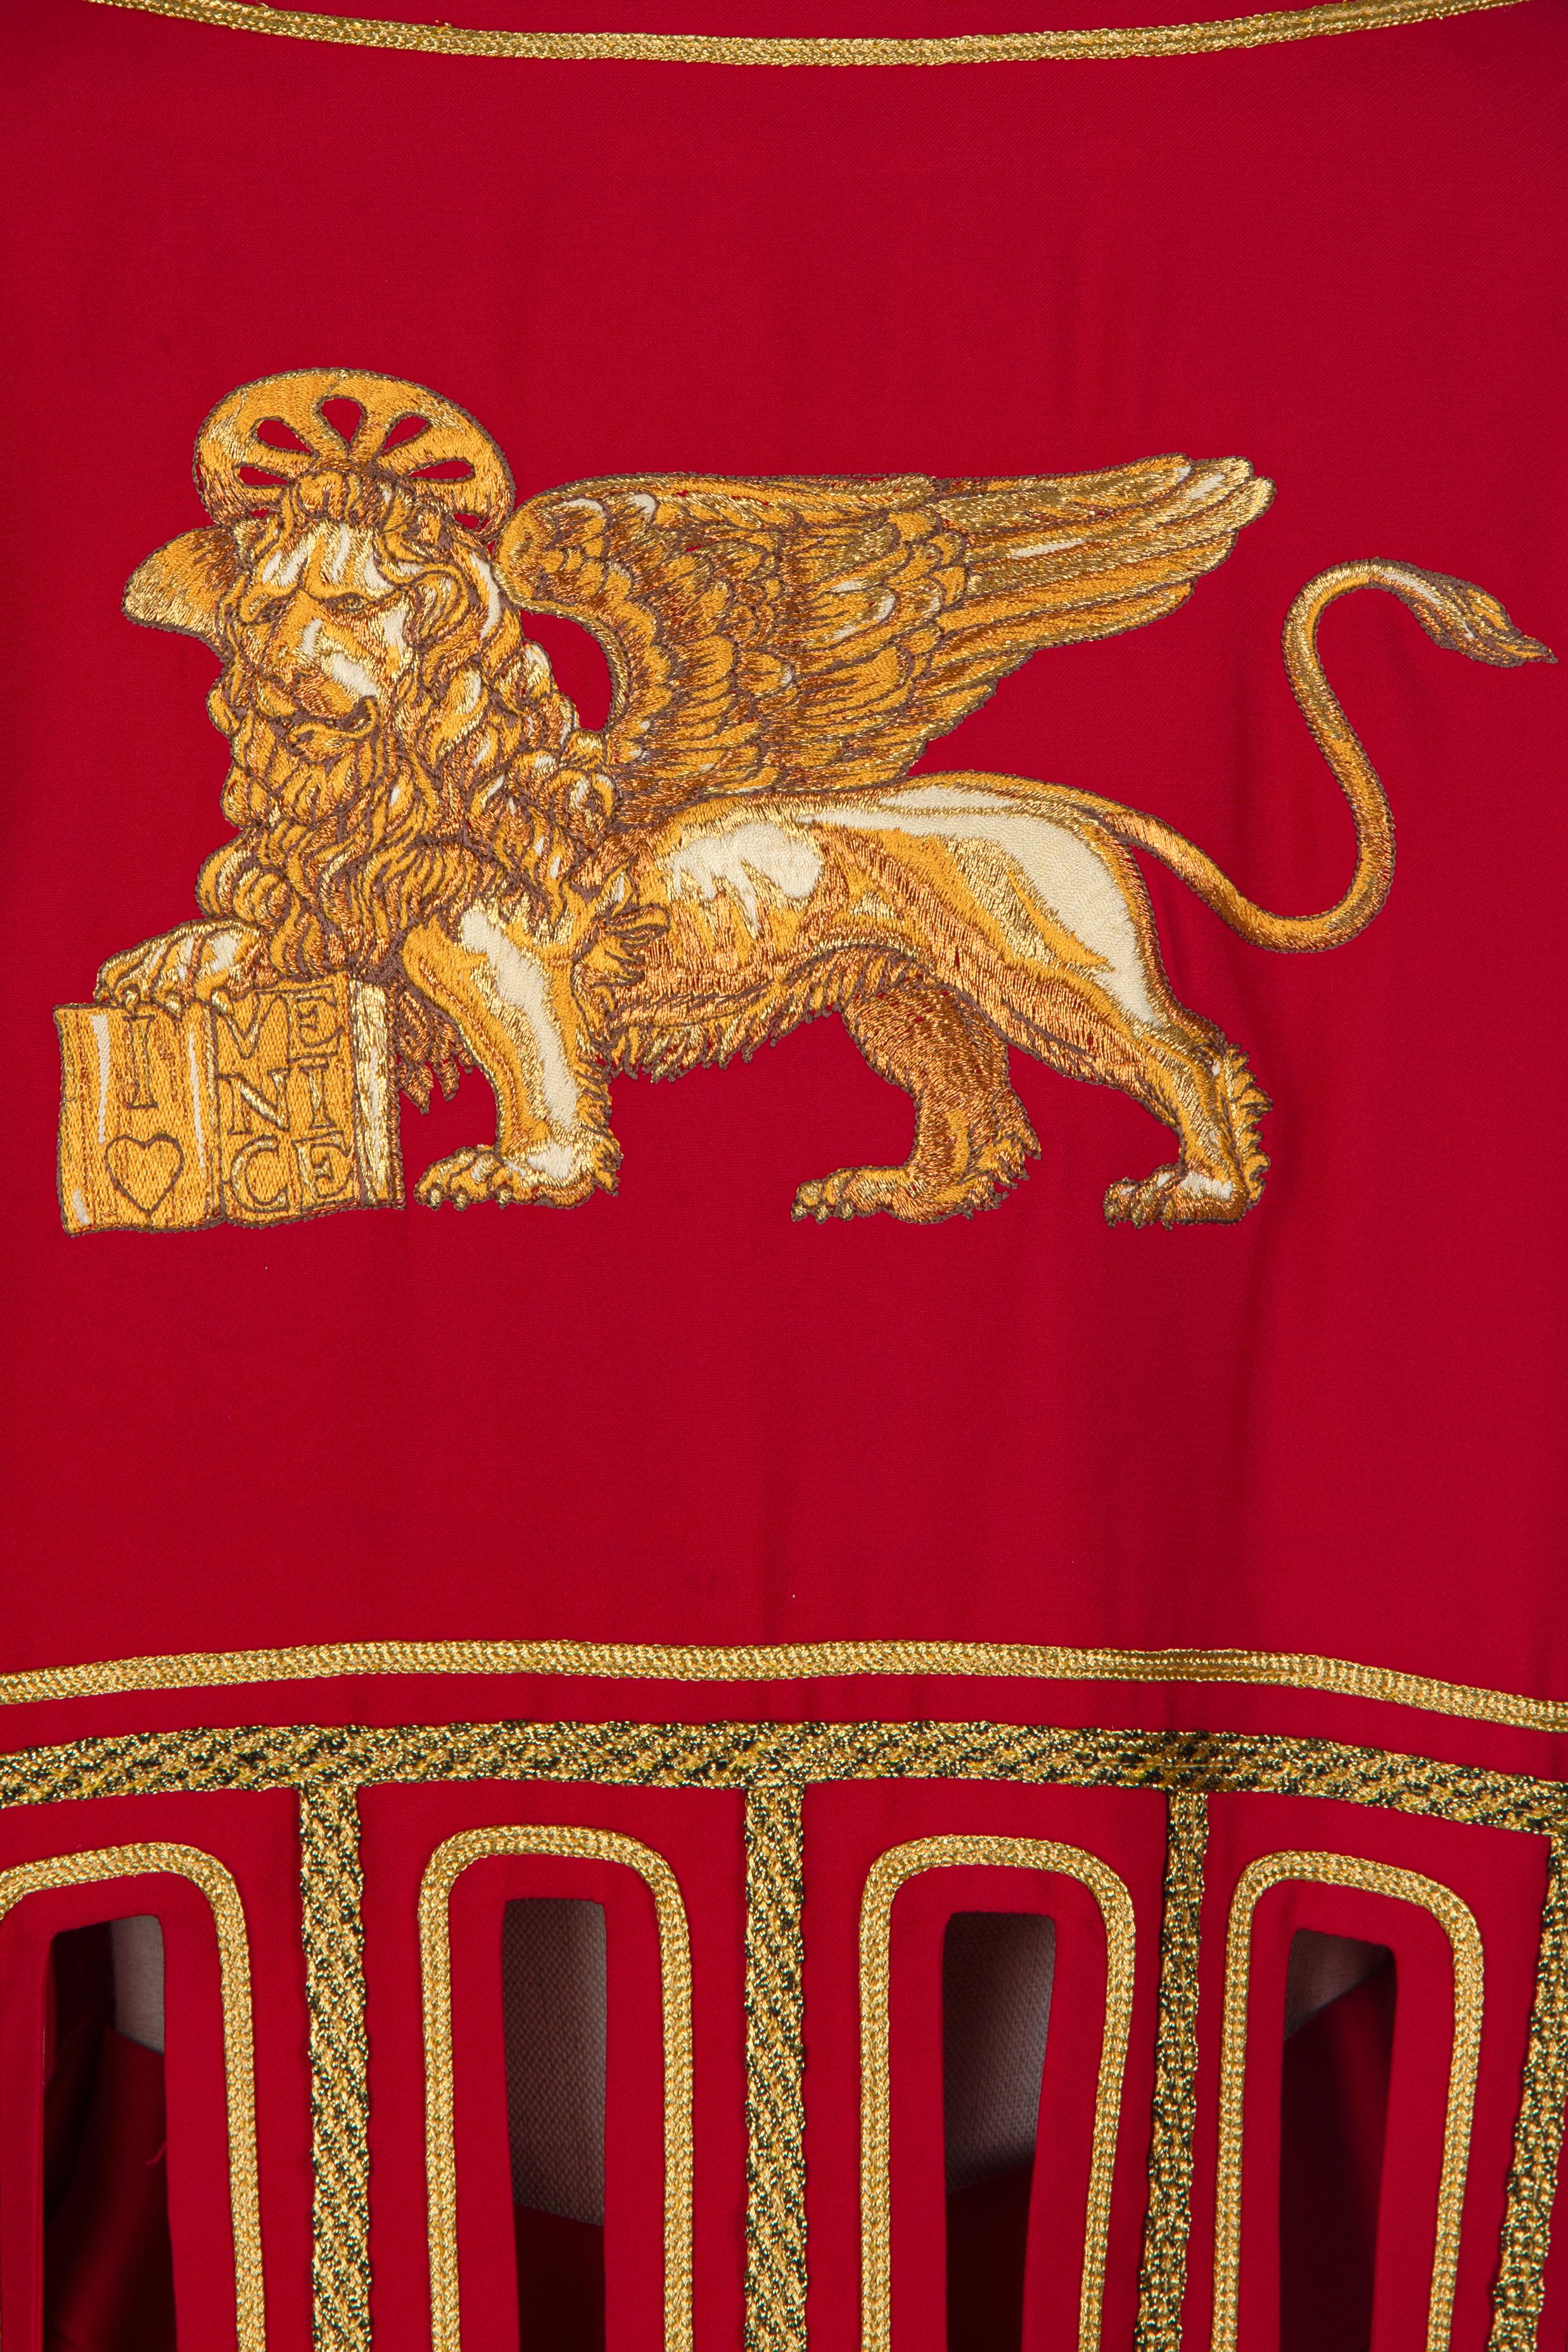 1989 MOSCHINO COUTURE Red I Love Venice Lion Appliquéd Jacket & Pant Suit For Sale 10